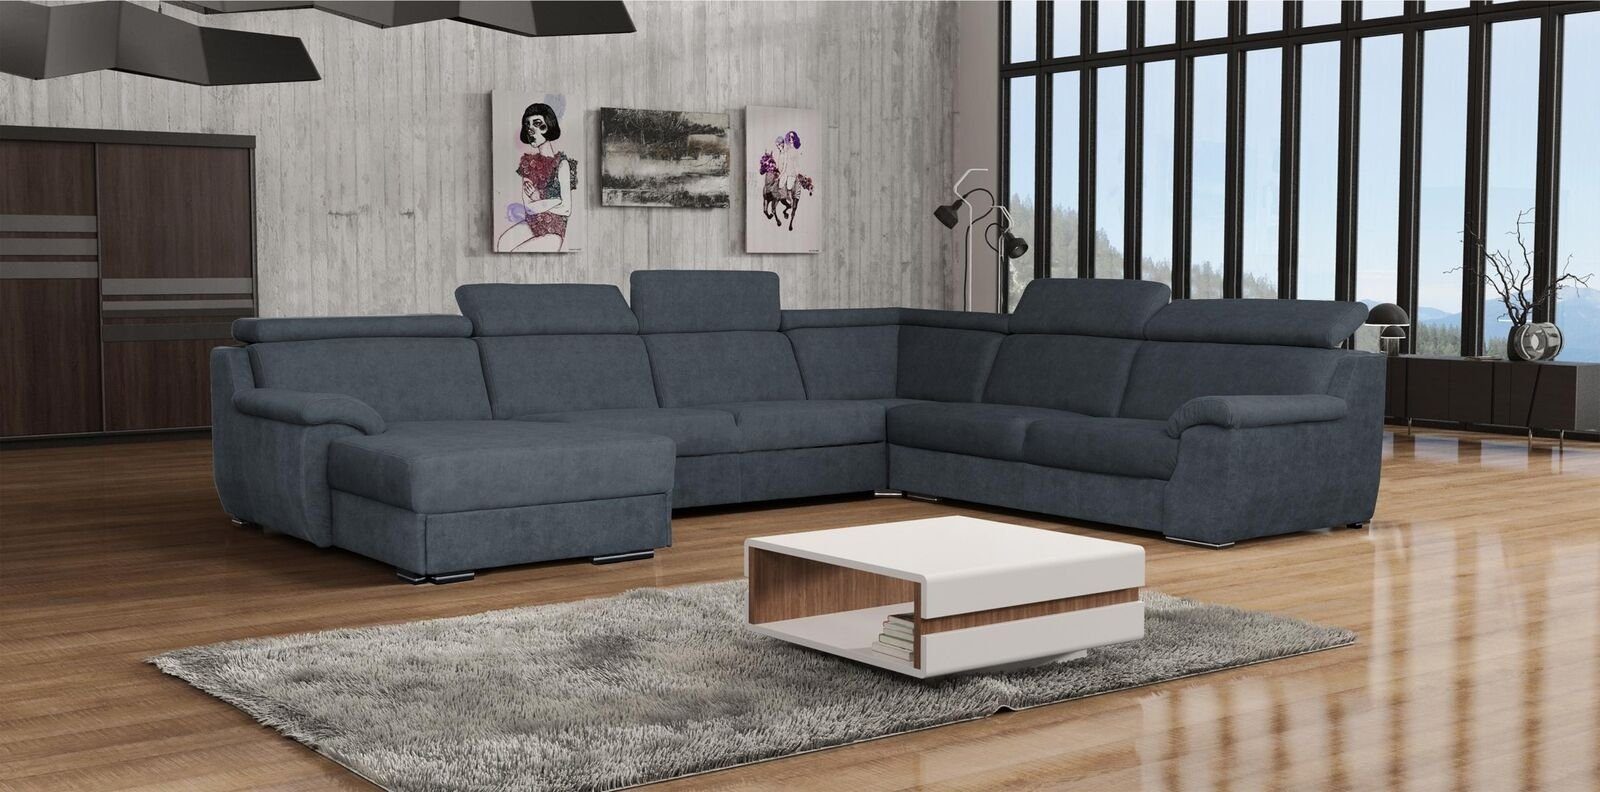 JVmoebel Ecksofa Graues Ecksofa Europe Couch U-form Möbel, Textil Sofas Made Polster in Relax Sitz